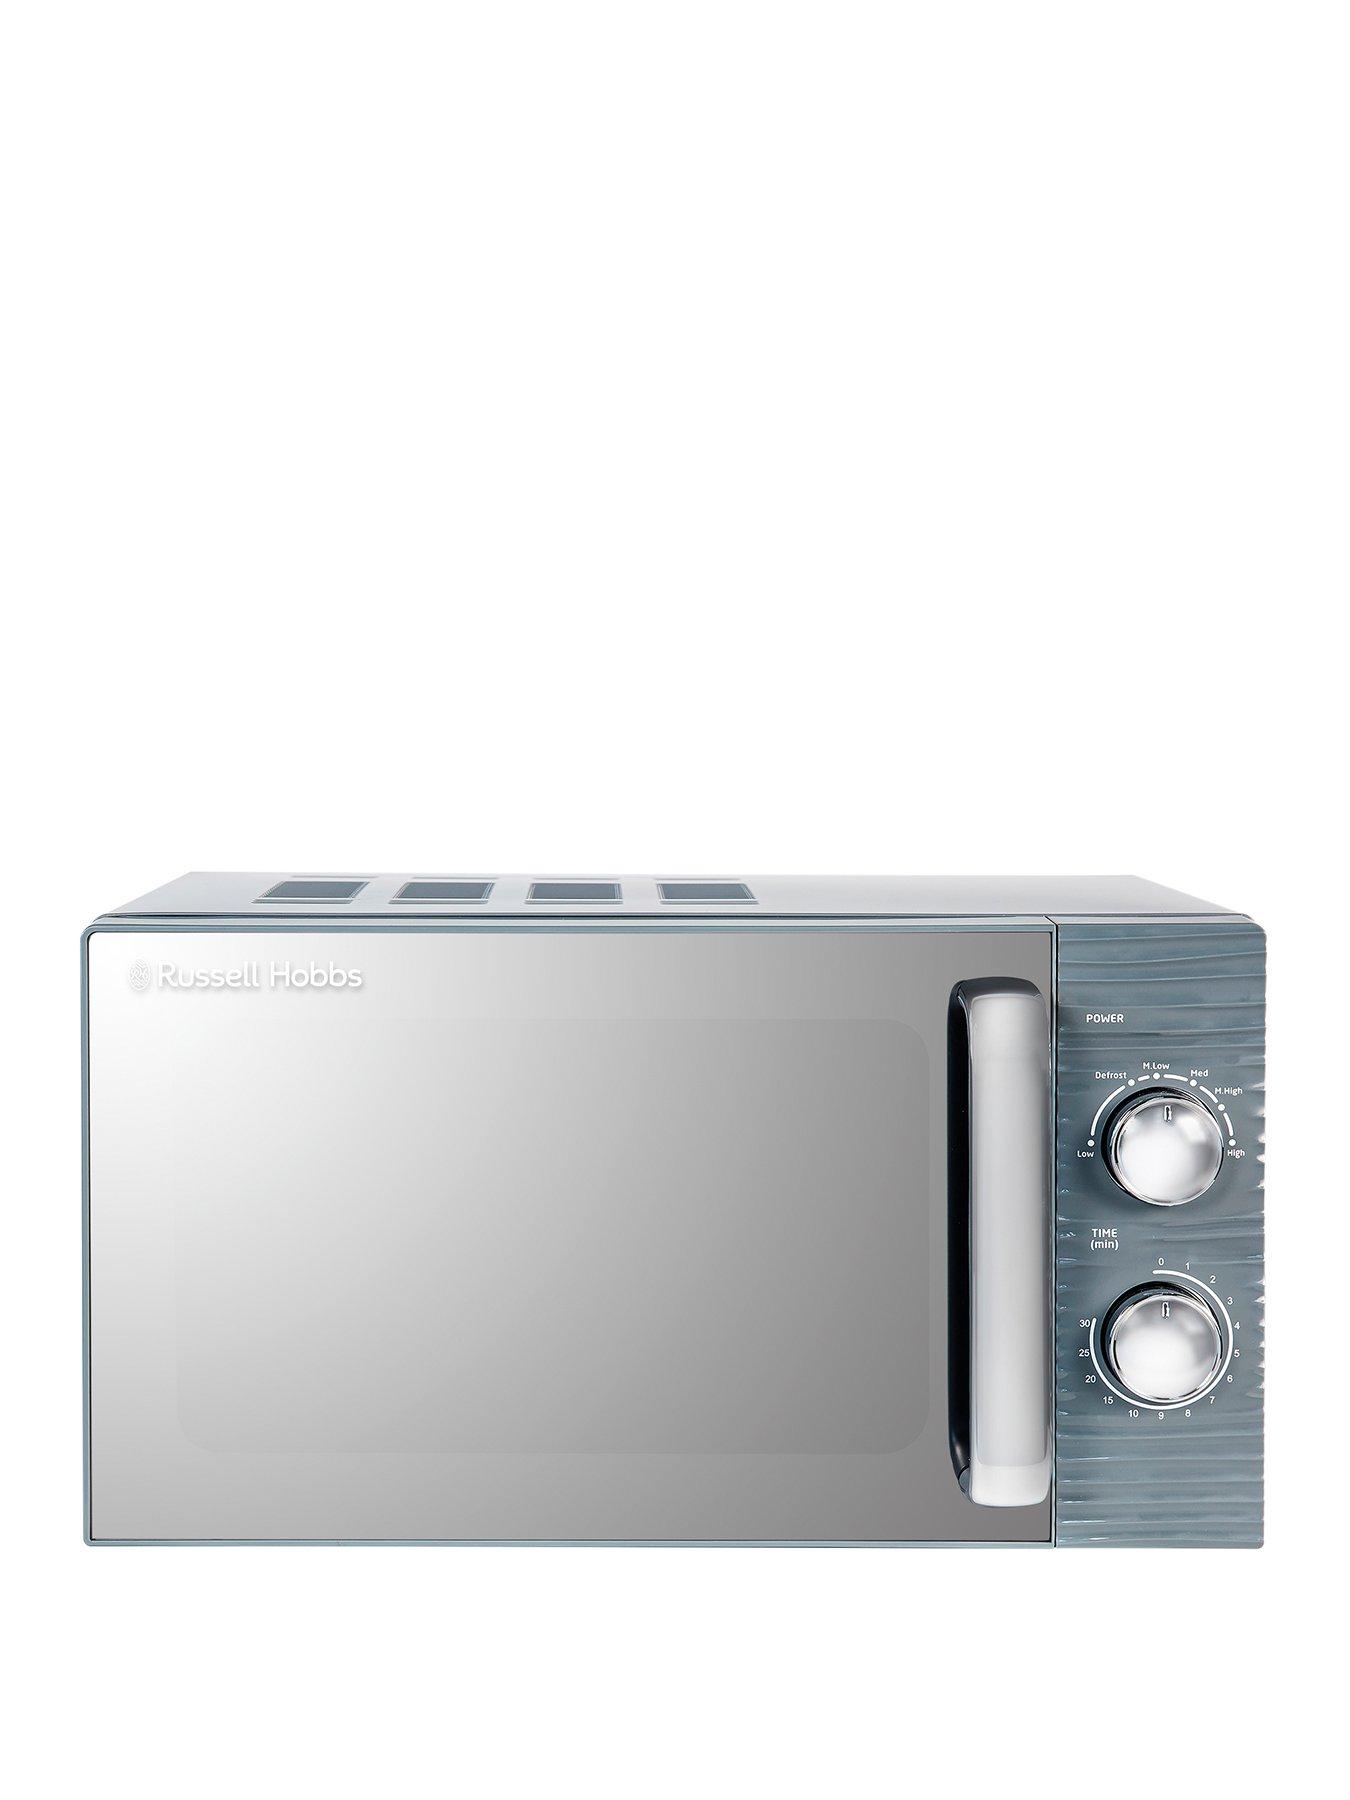 https://media.littlewoods.com/i/littlewoods/TQLVJ_SQ1_0000000005_GREY_SLf/russell-hobbs-russel-hobbs-rhm1731g-grey-inspire-manual-microwave.jpg?$180x240_retinamobilex2$&$roundel_littlewoods$&p1_img=lw_sale_2018